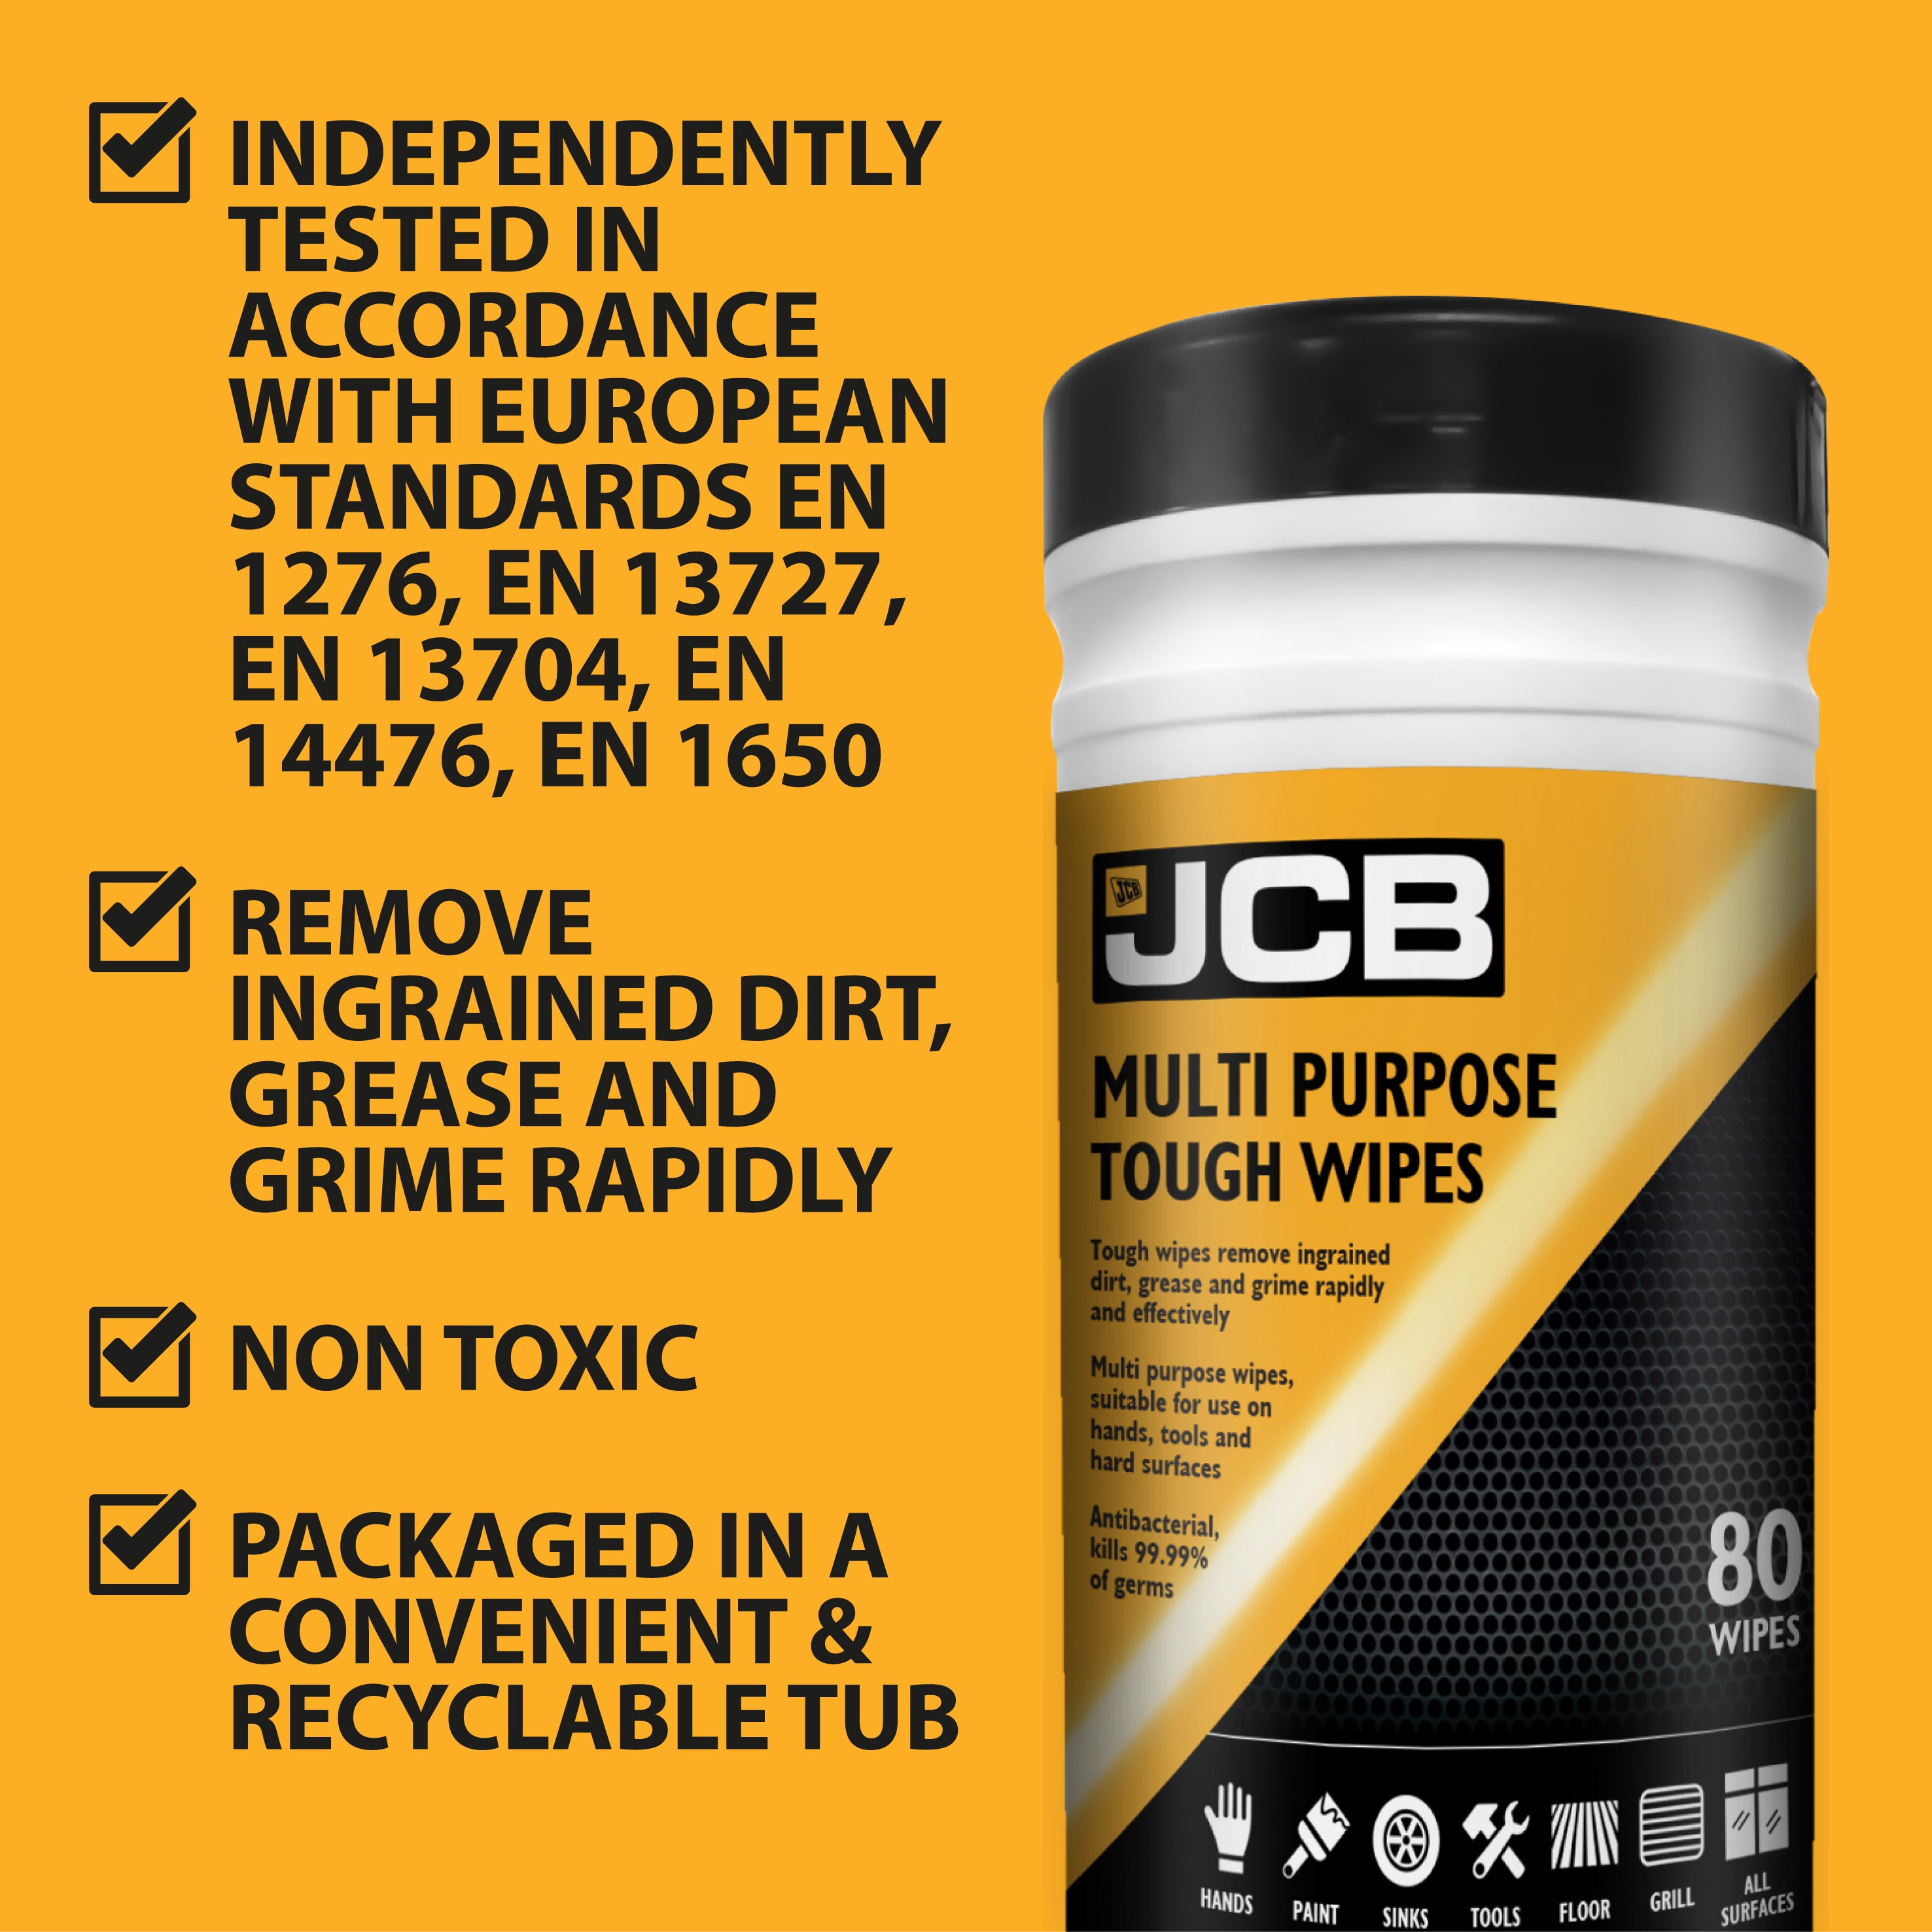 JCB Multi Purpose Tough Wipes (80 wipes)